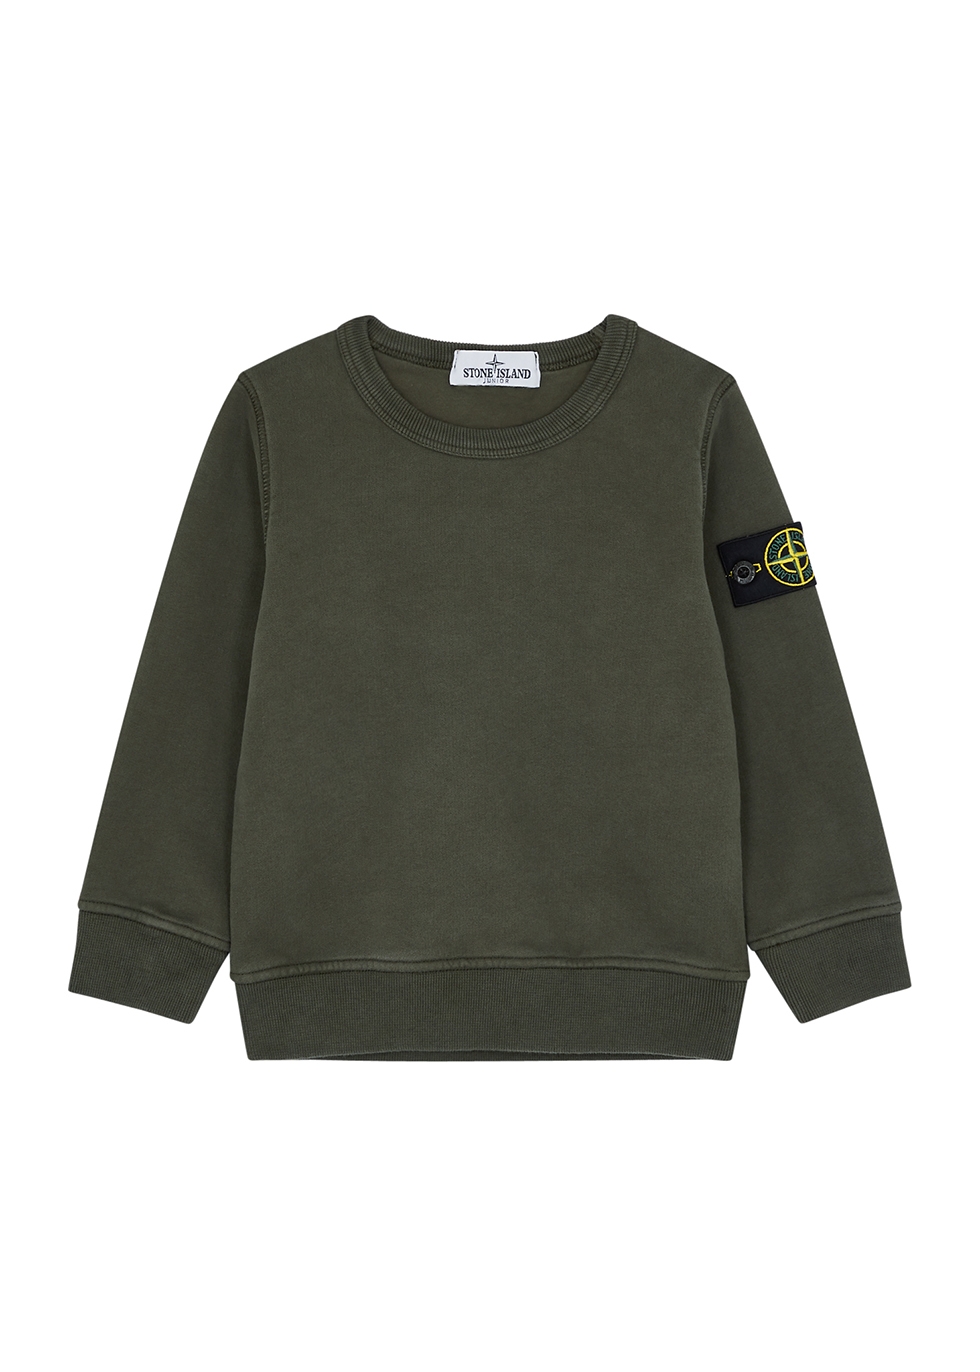 Stone Island KIDS Green cotton sweatshirt (2-4 years) - Harvey Nichols